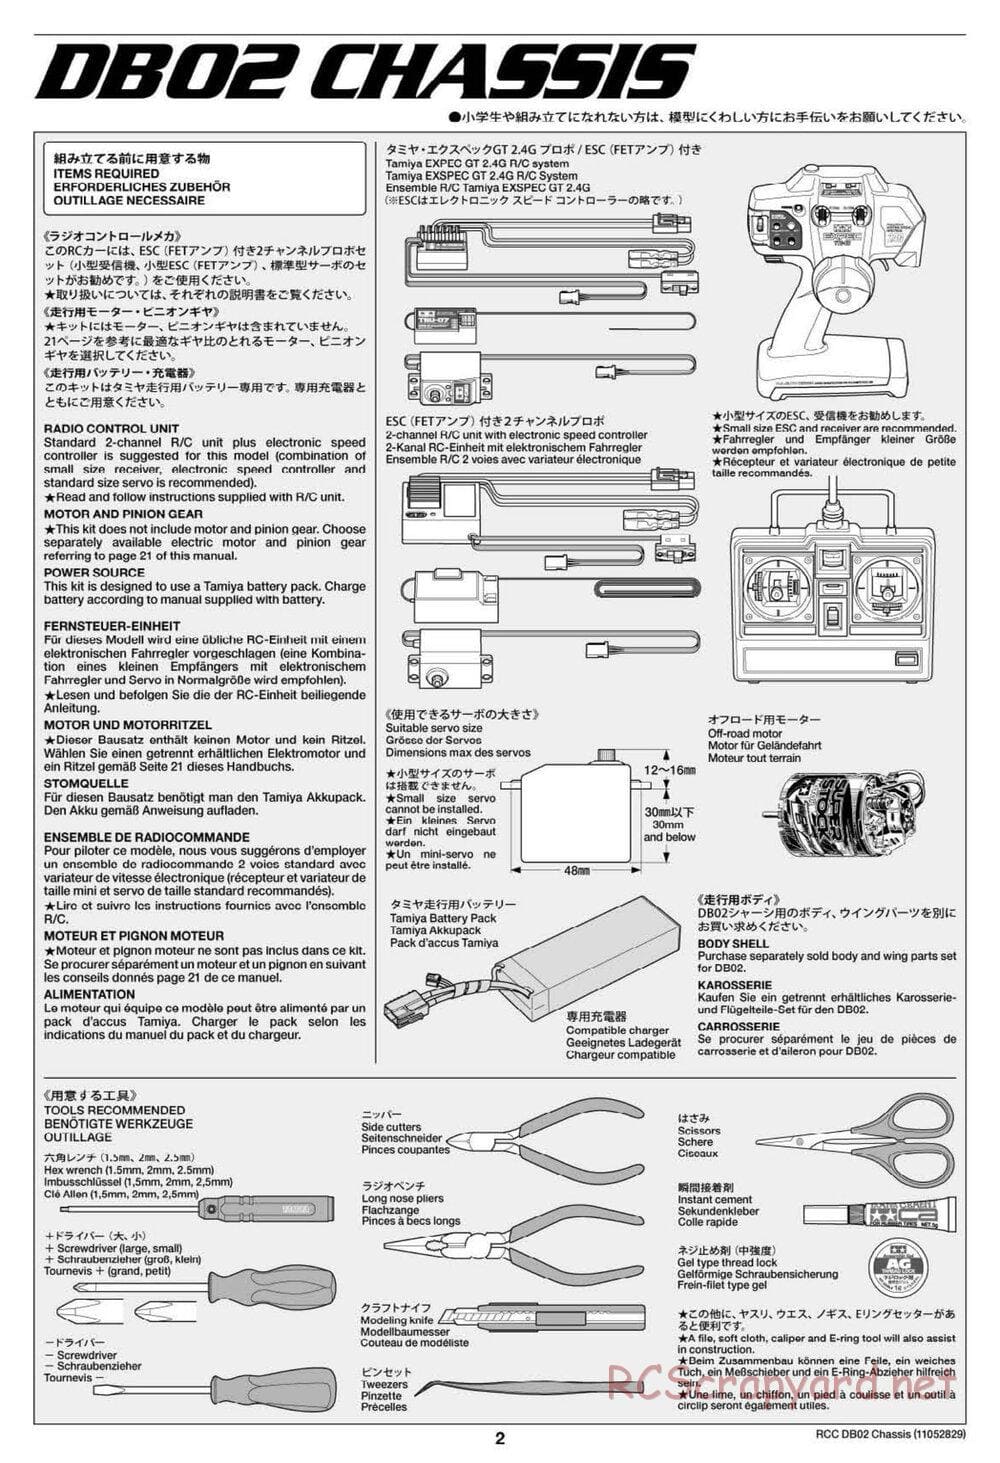 Tamiya - Leonis - DB-02 Chassis - Manual - Page 2